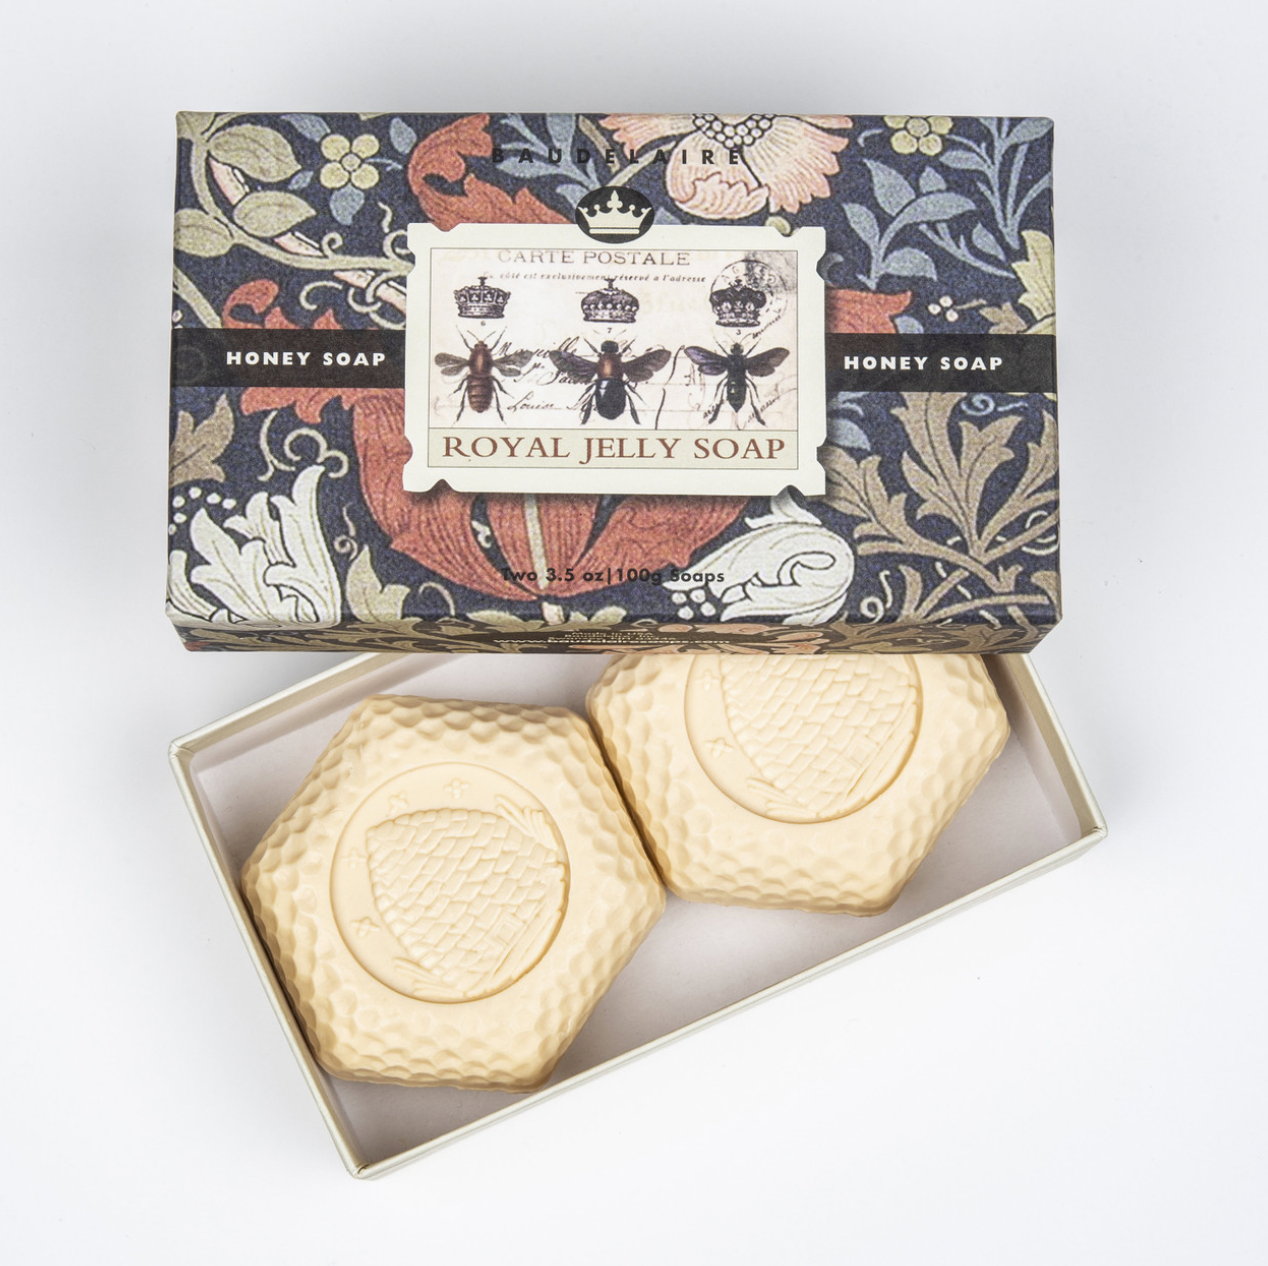 Baudelaire "Royal Jelly" honey 3.5oz - Gift box 2 bar soaps